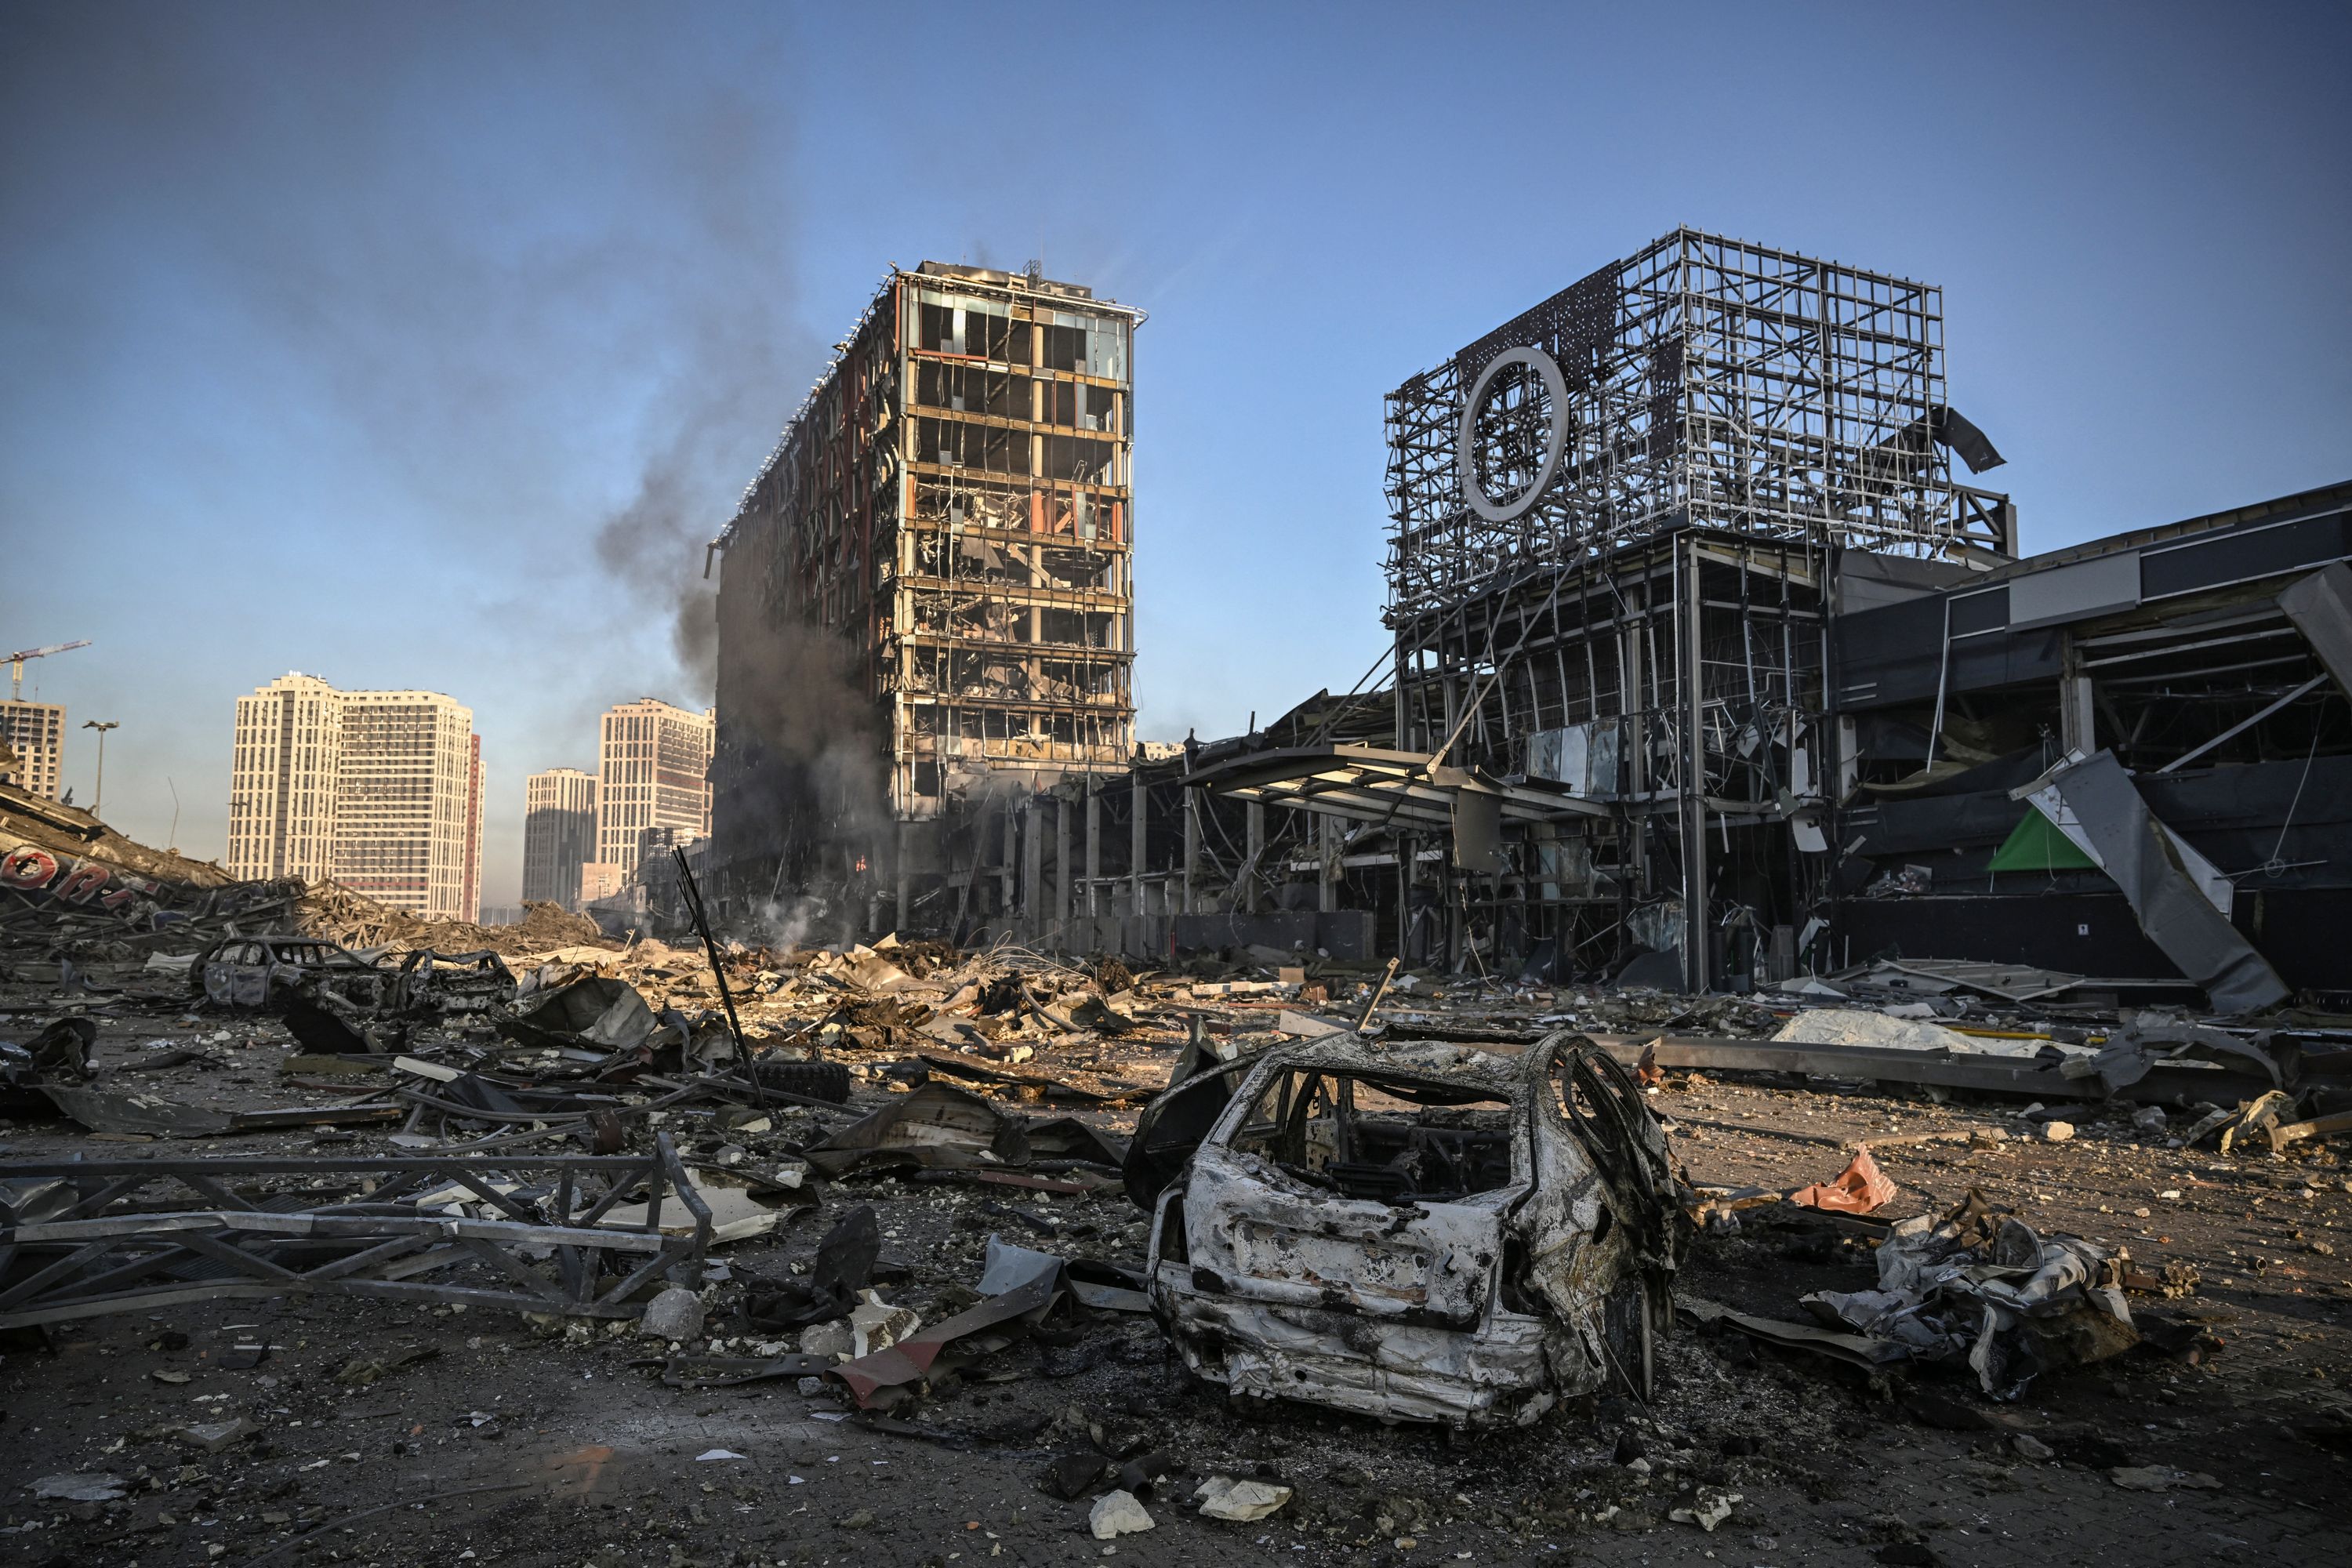 It will take decades to rebuild Ukraine’s cities